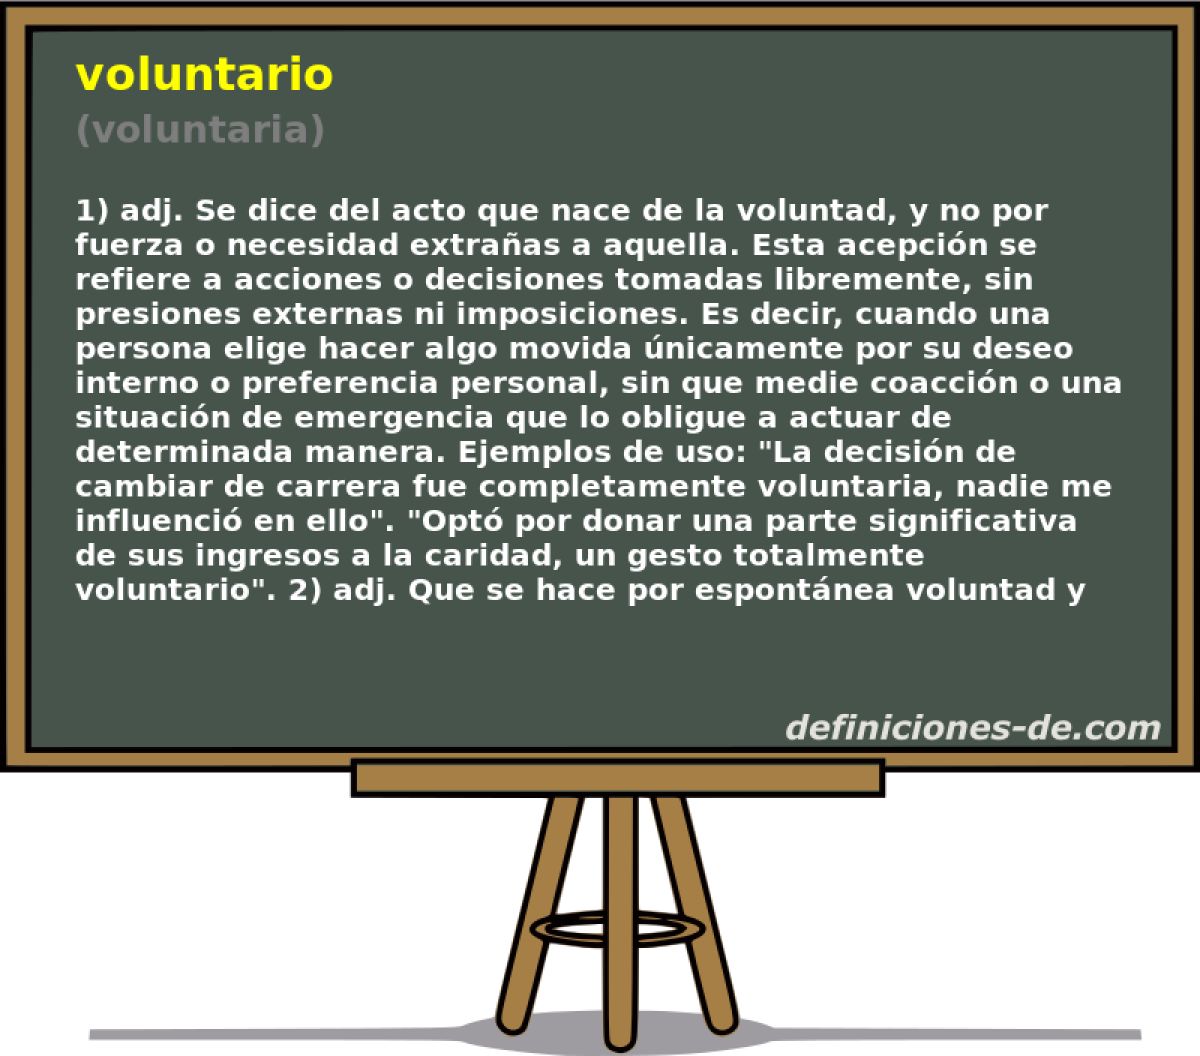 voluntario (voluntaria)